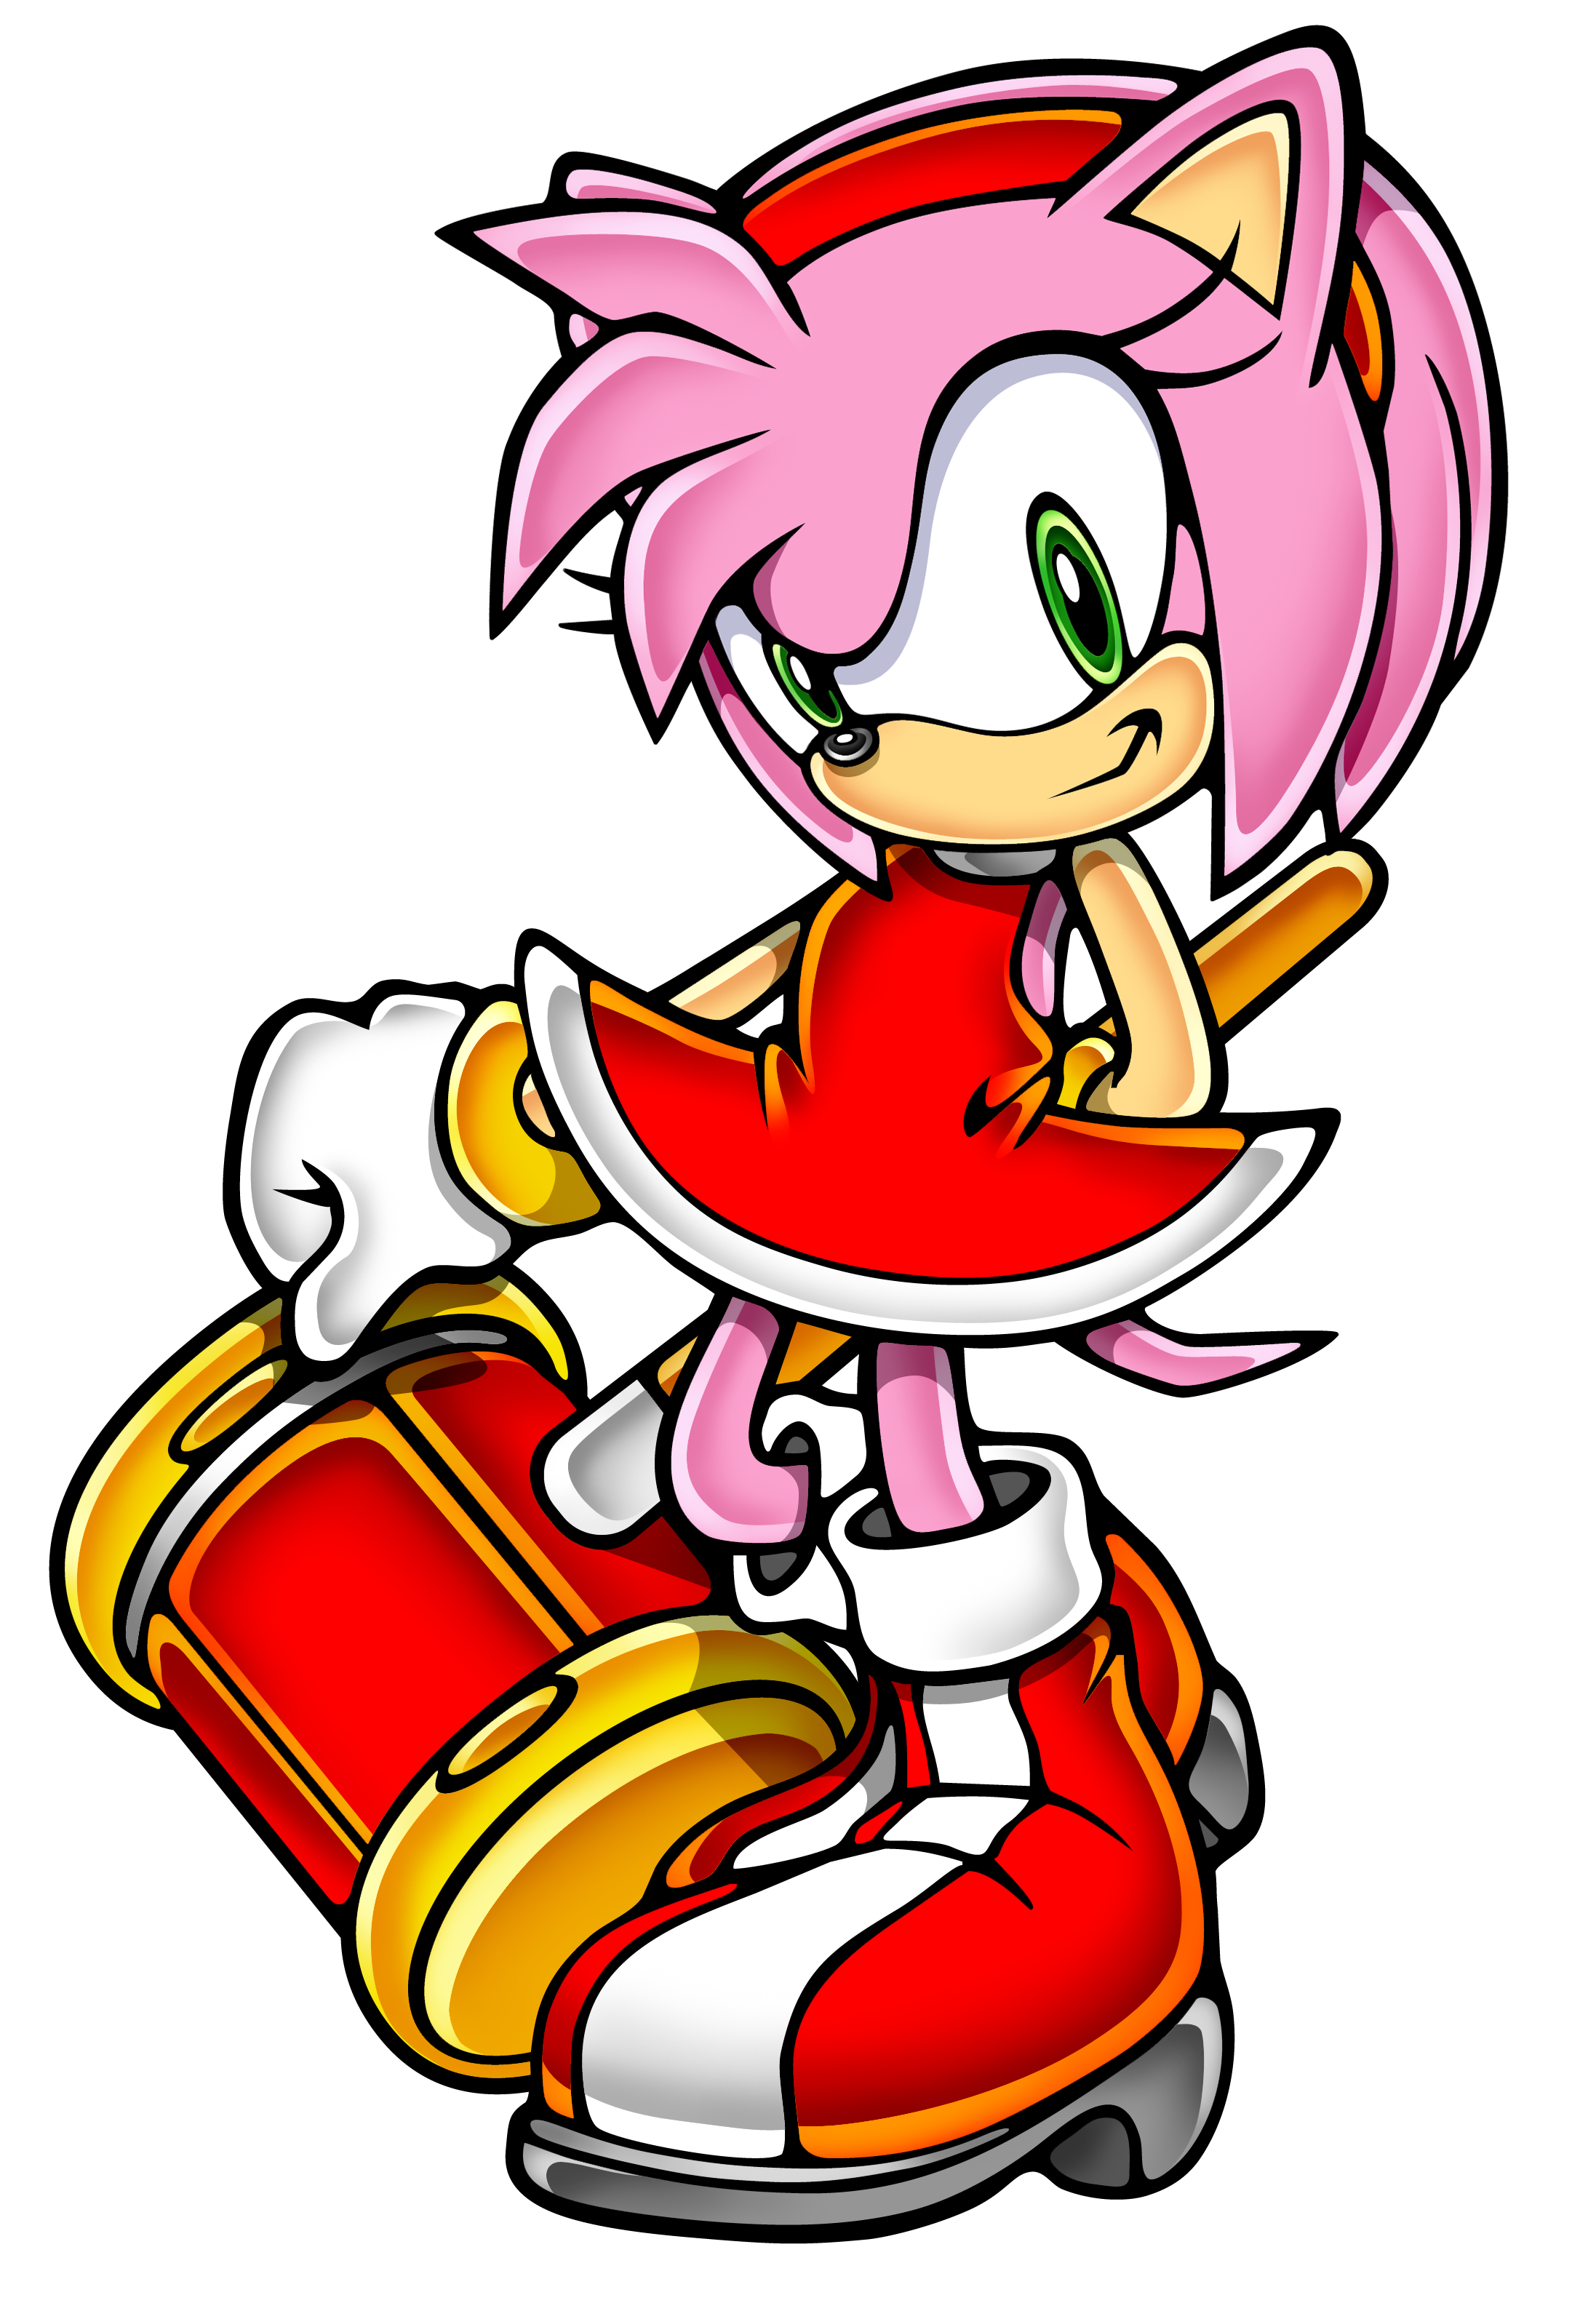 Amy Rose - Sonic Retro